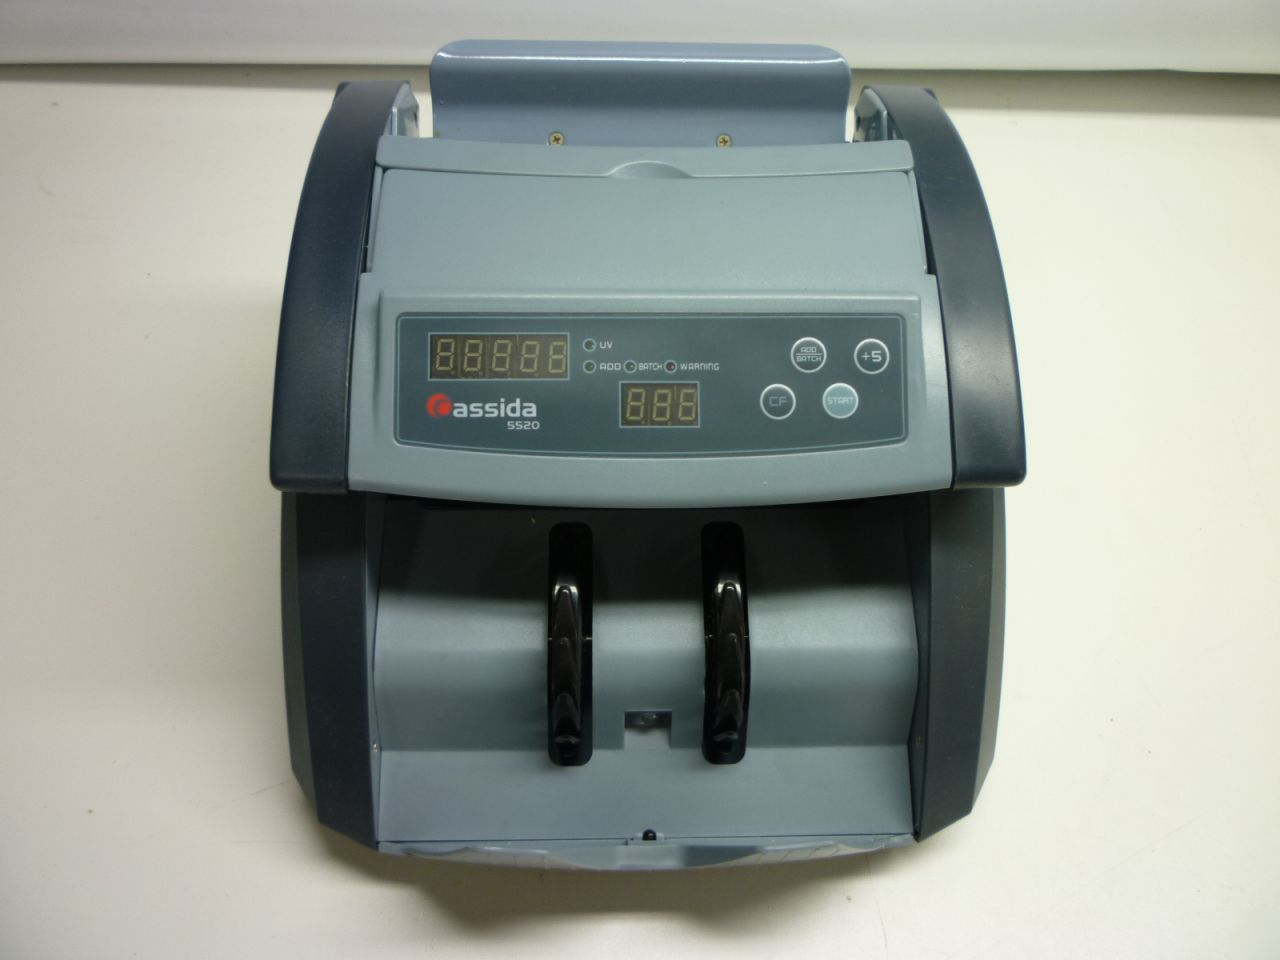 Cassida 5520 uv commercial money counting machine